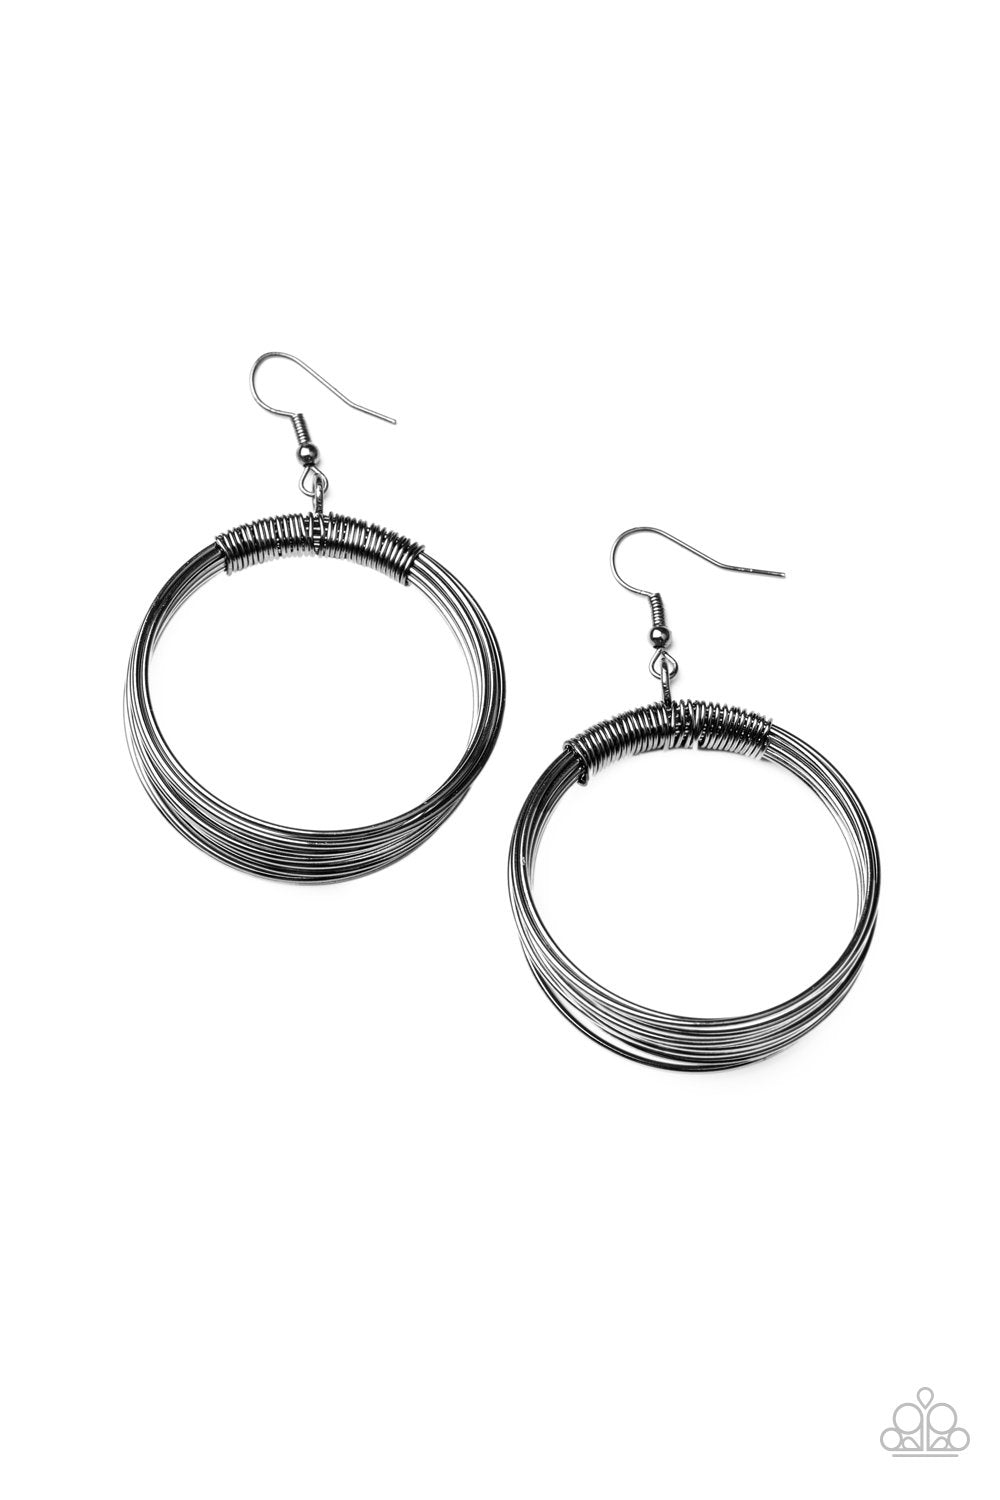 Urban-Spun Gunmetal Black Earrings - Paparazzi Accessories - lightbox -CarasShop.com - $5 Jewelry by Cara Jewels